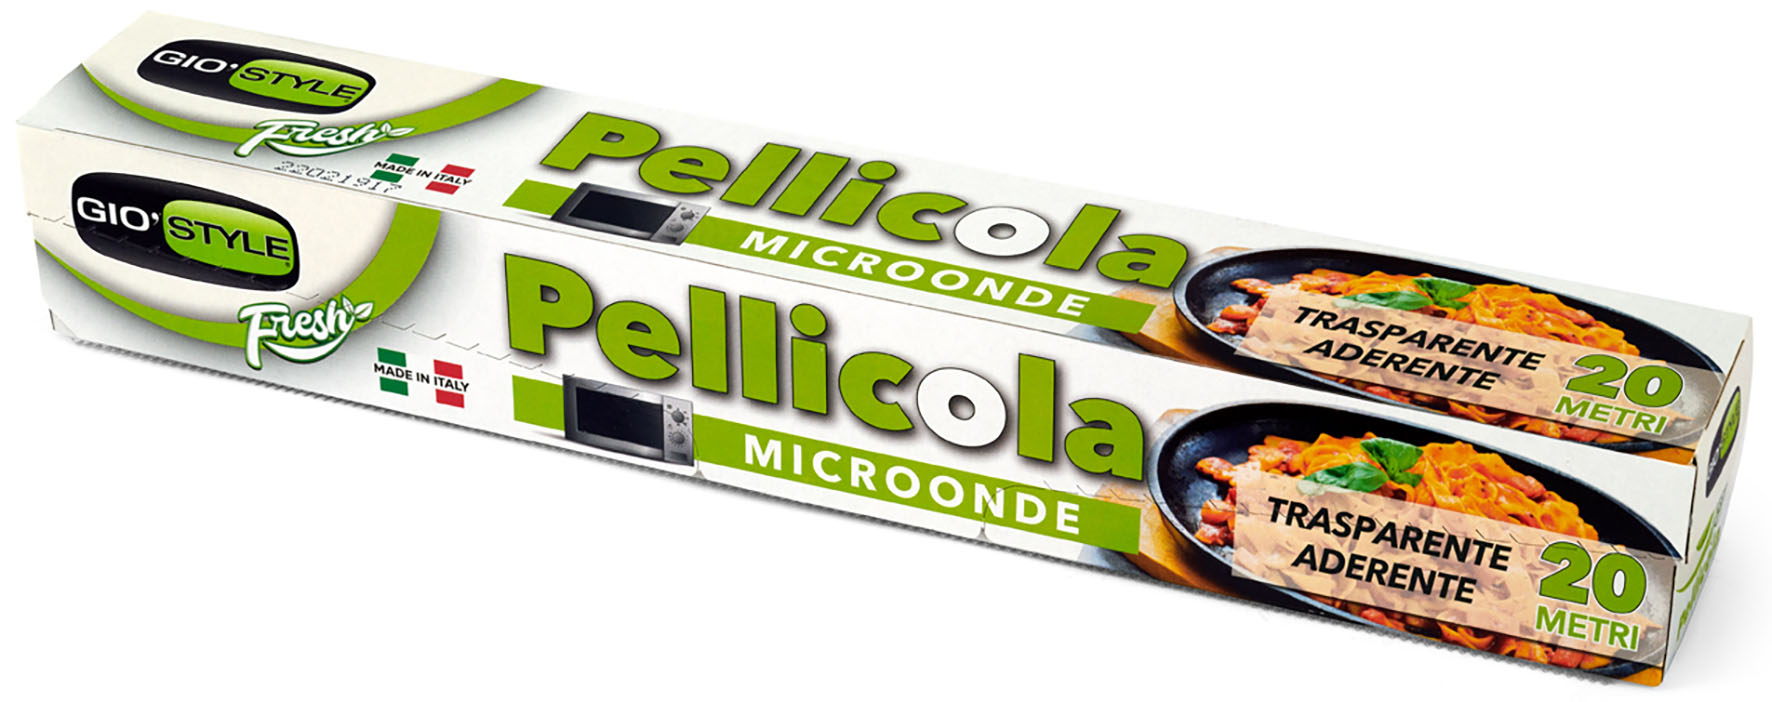 ROTOLO PELLICOLA 20MT MICROOND